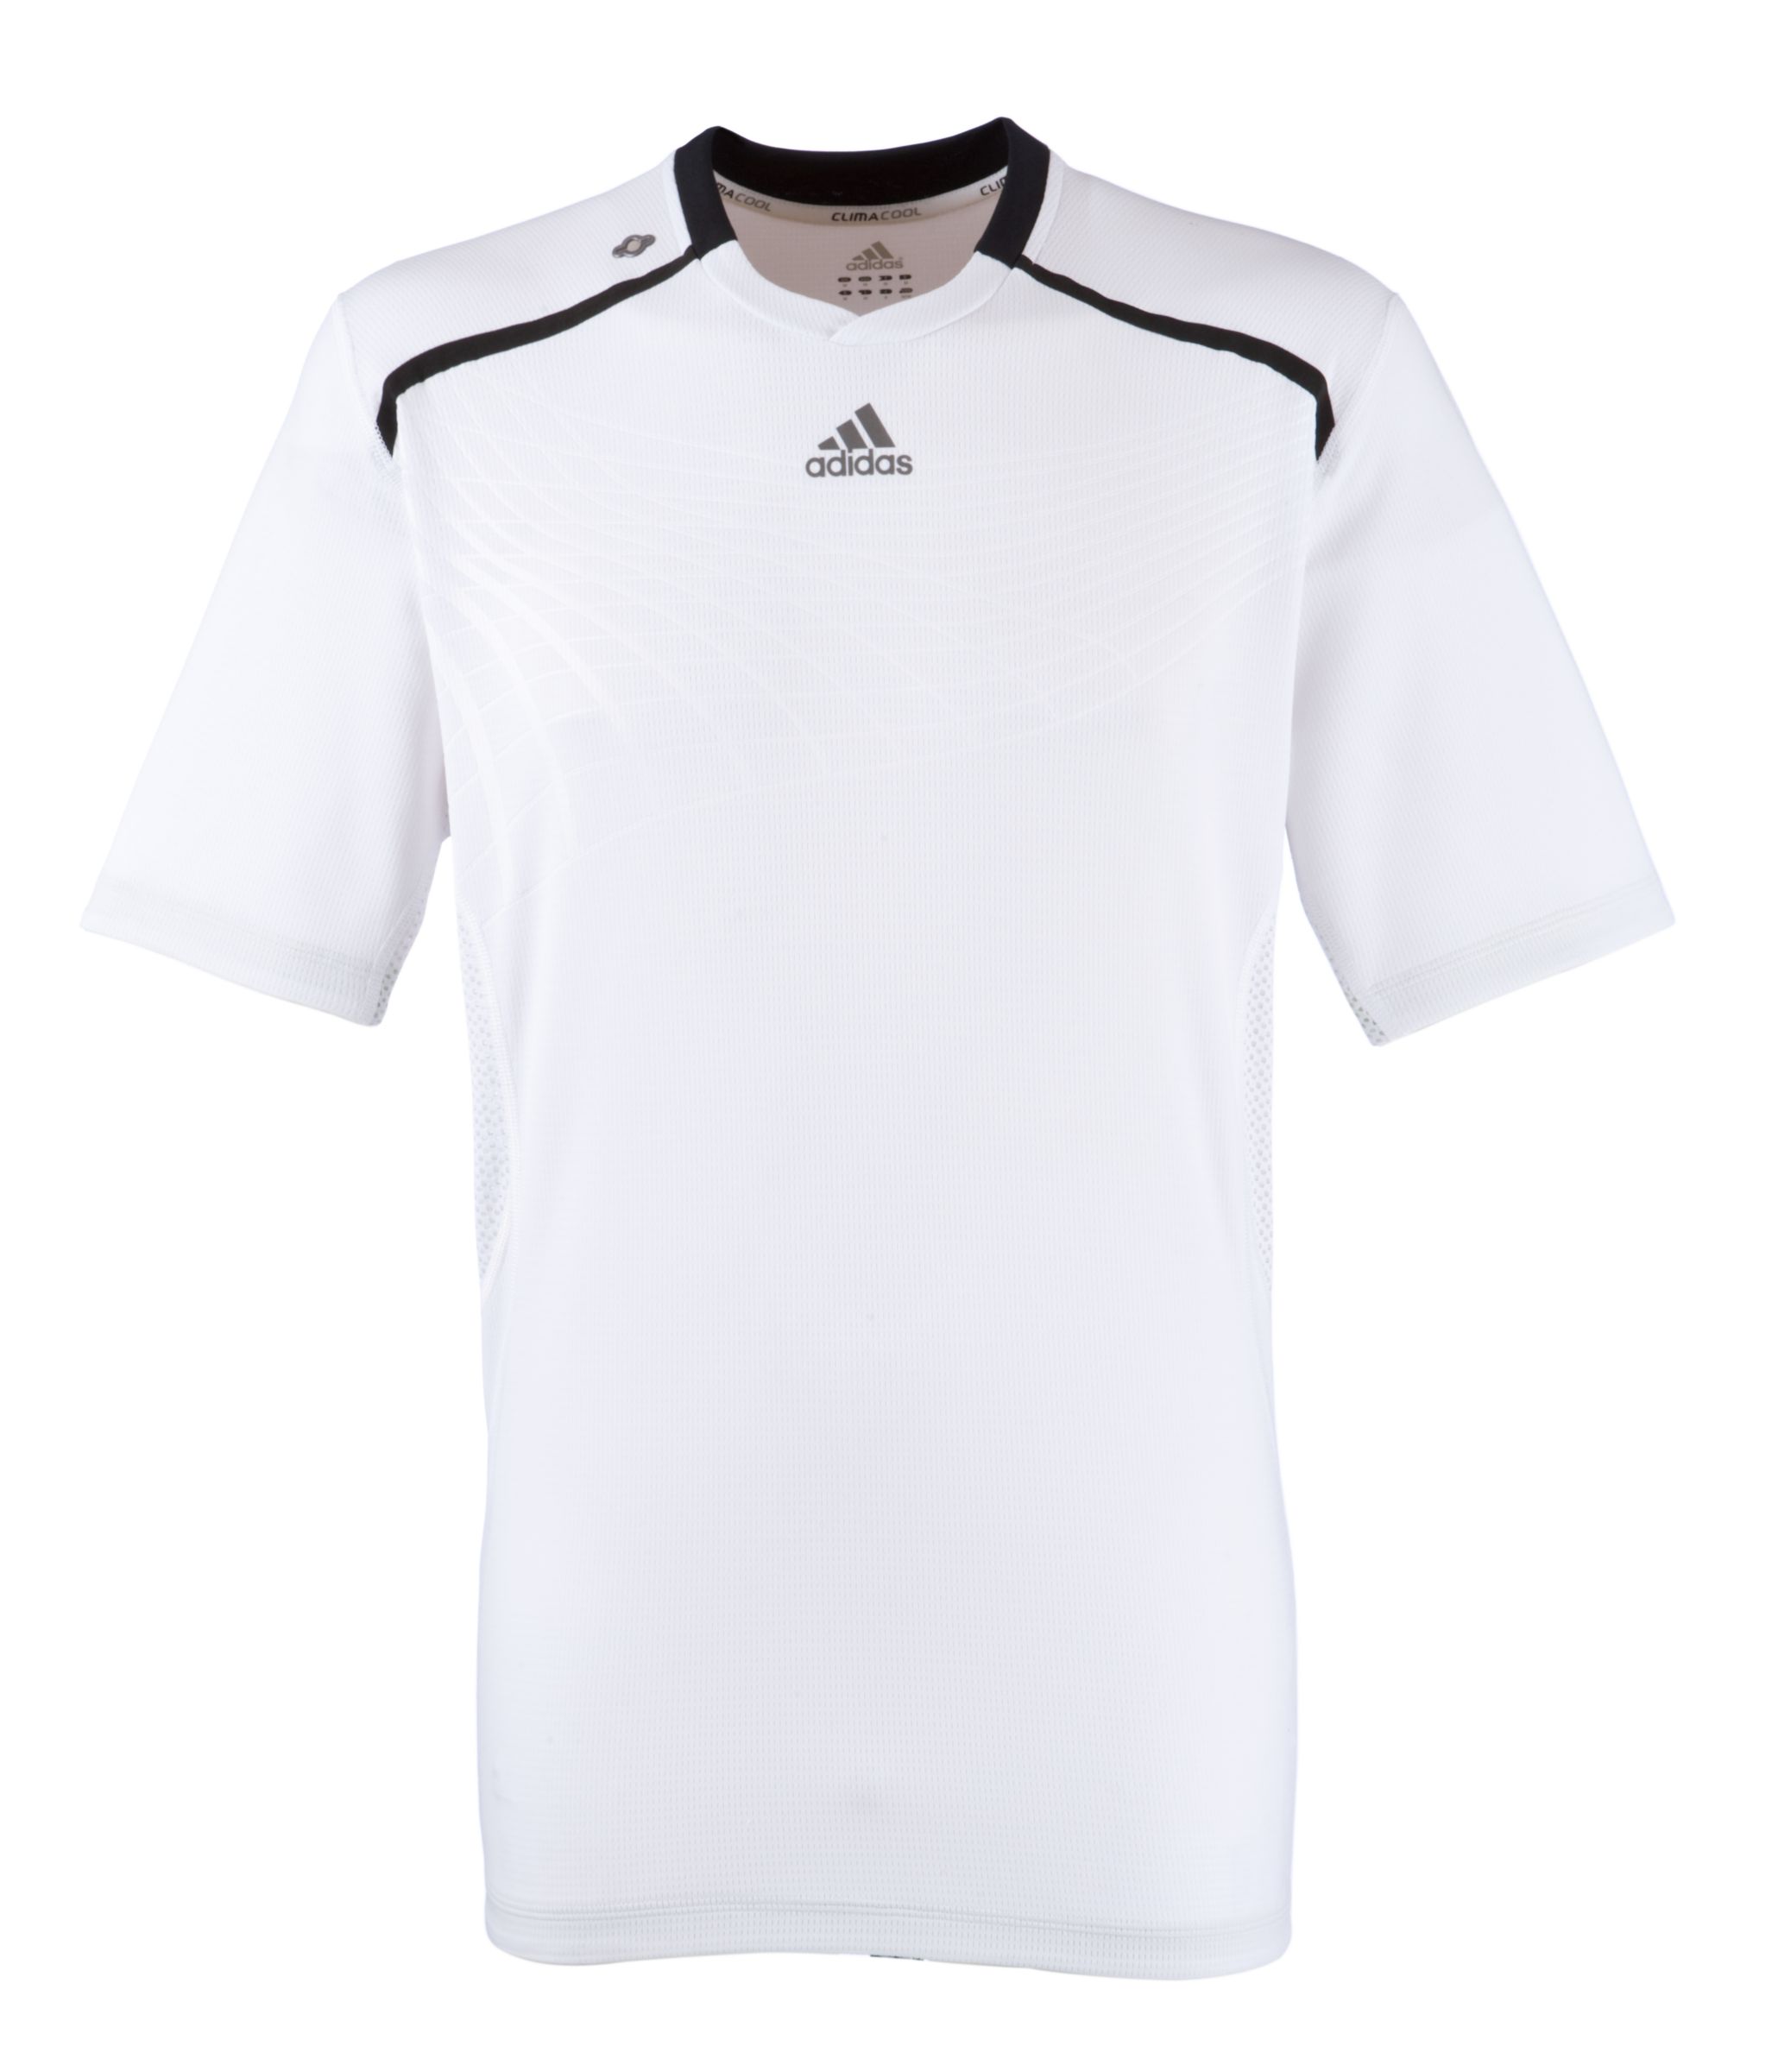 Adidas Adistar Short Sleeve T-Shirt, White